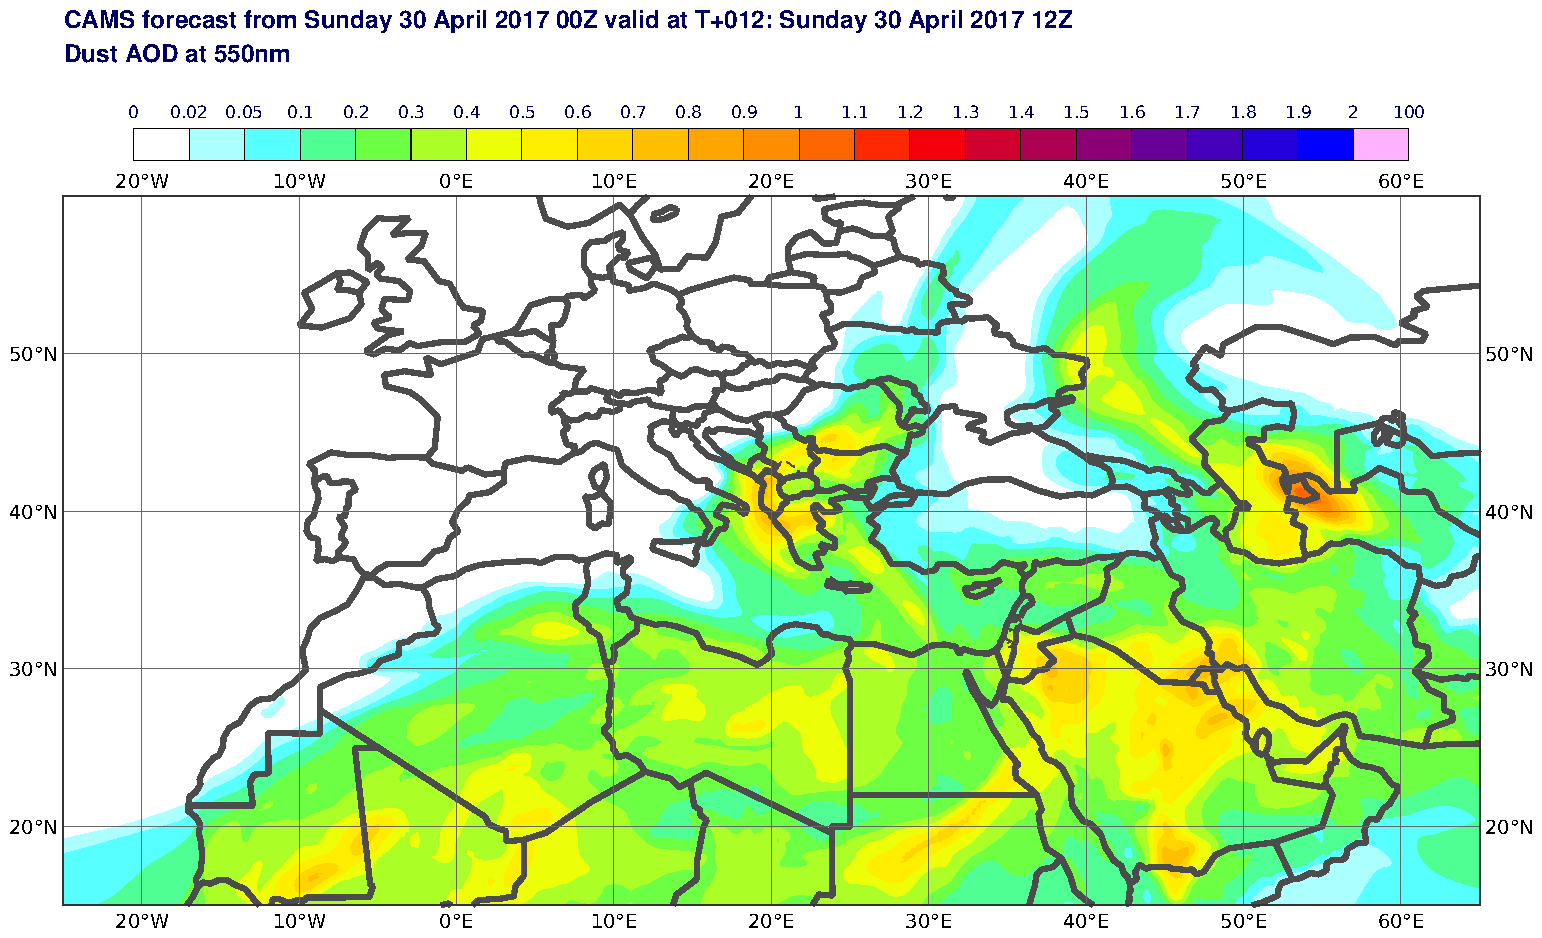 Dust AOD at 550nm valid at T12 - 2017-04-30 12:00